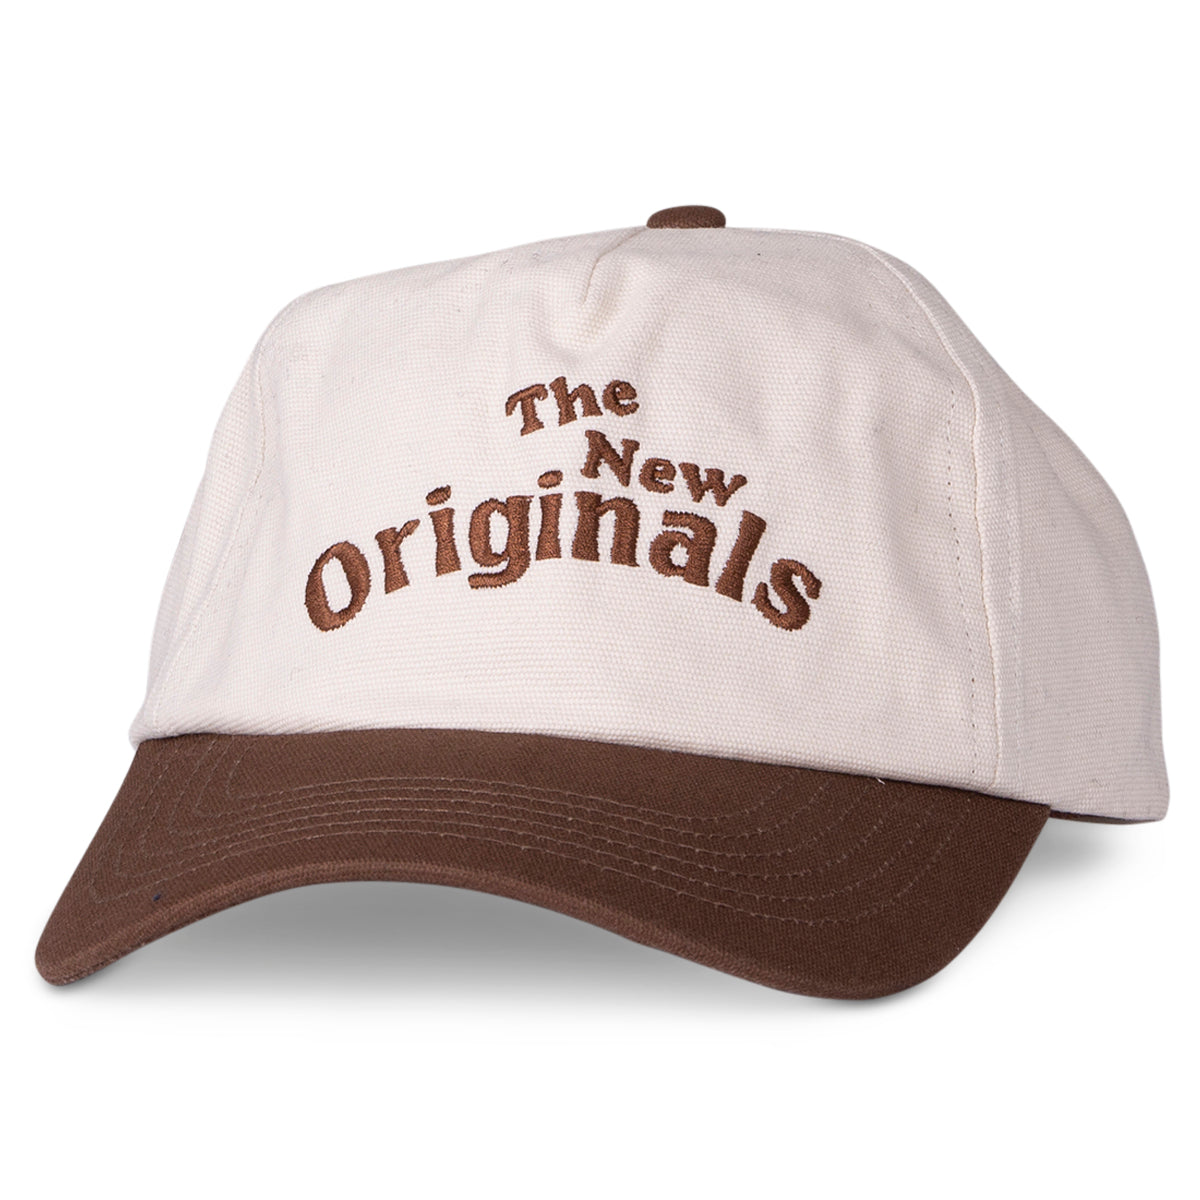 The New Originals Cap off-white met bruin | Workman cap